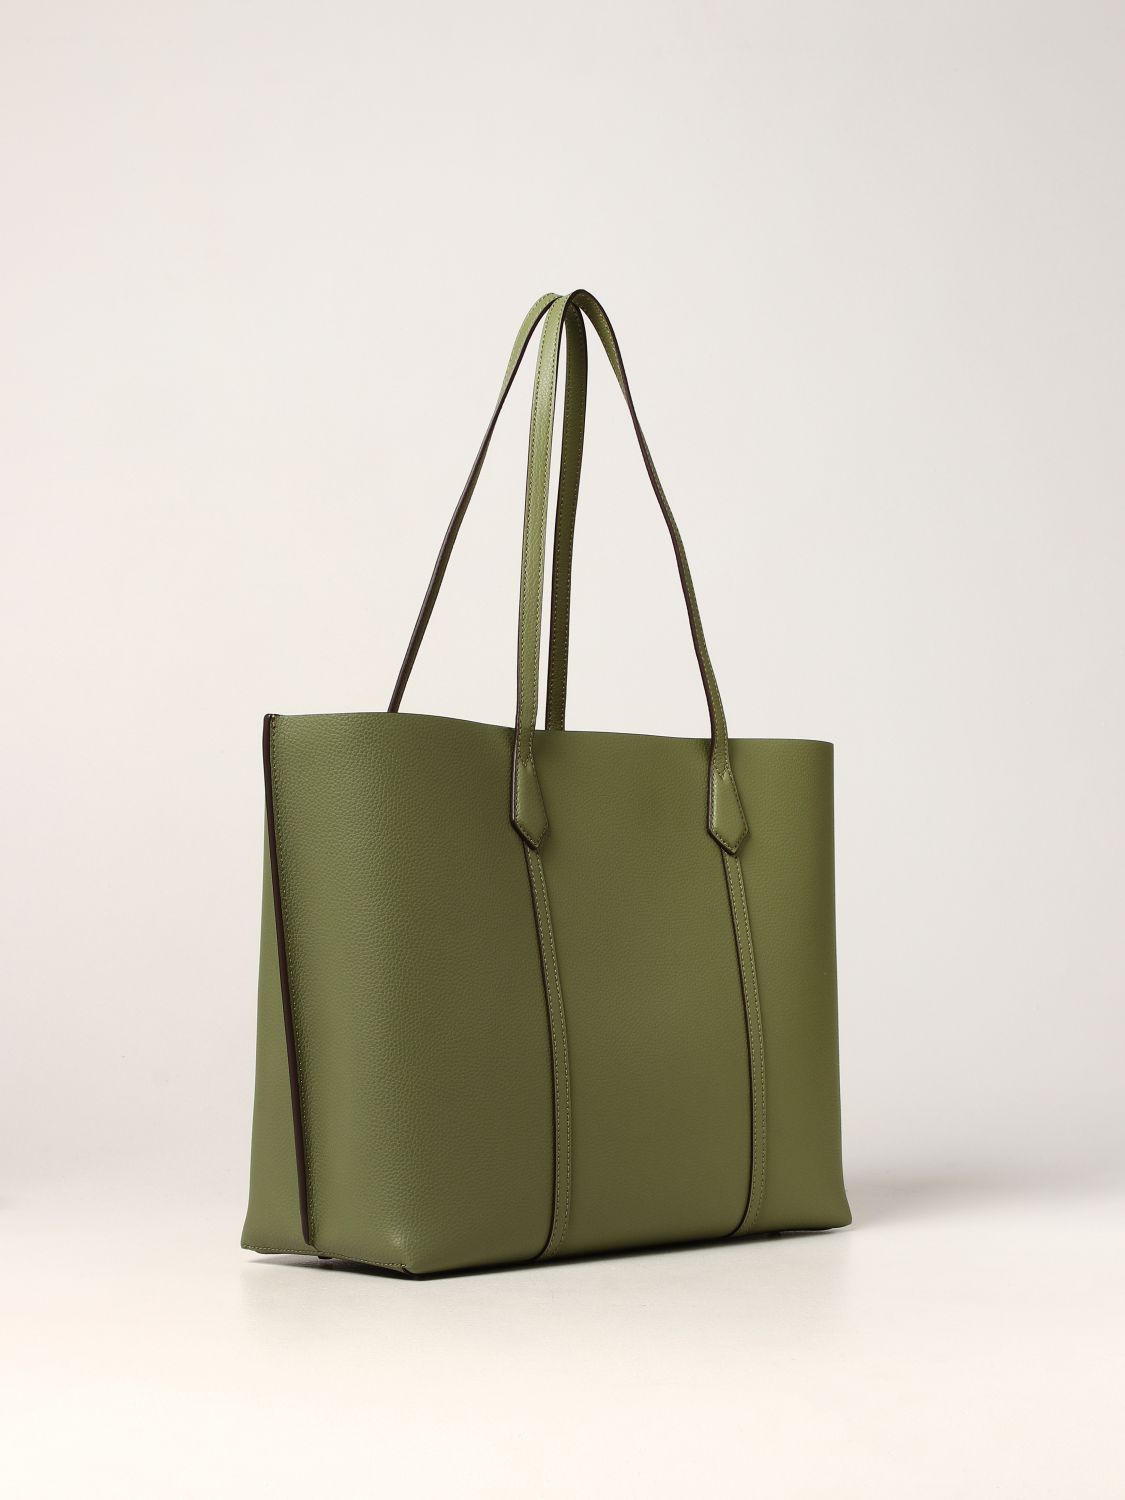 Tory Burch Robinson Saffiano Leather Tote Bag Green $348